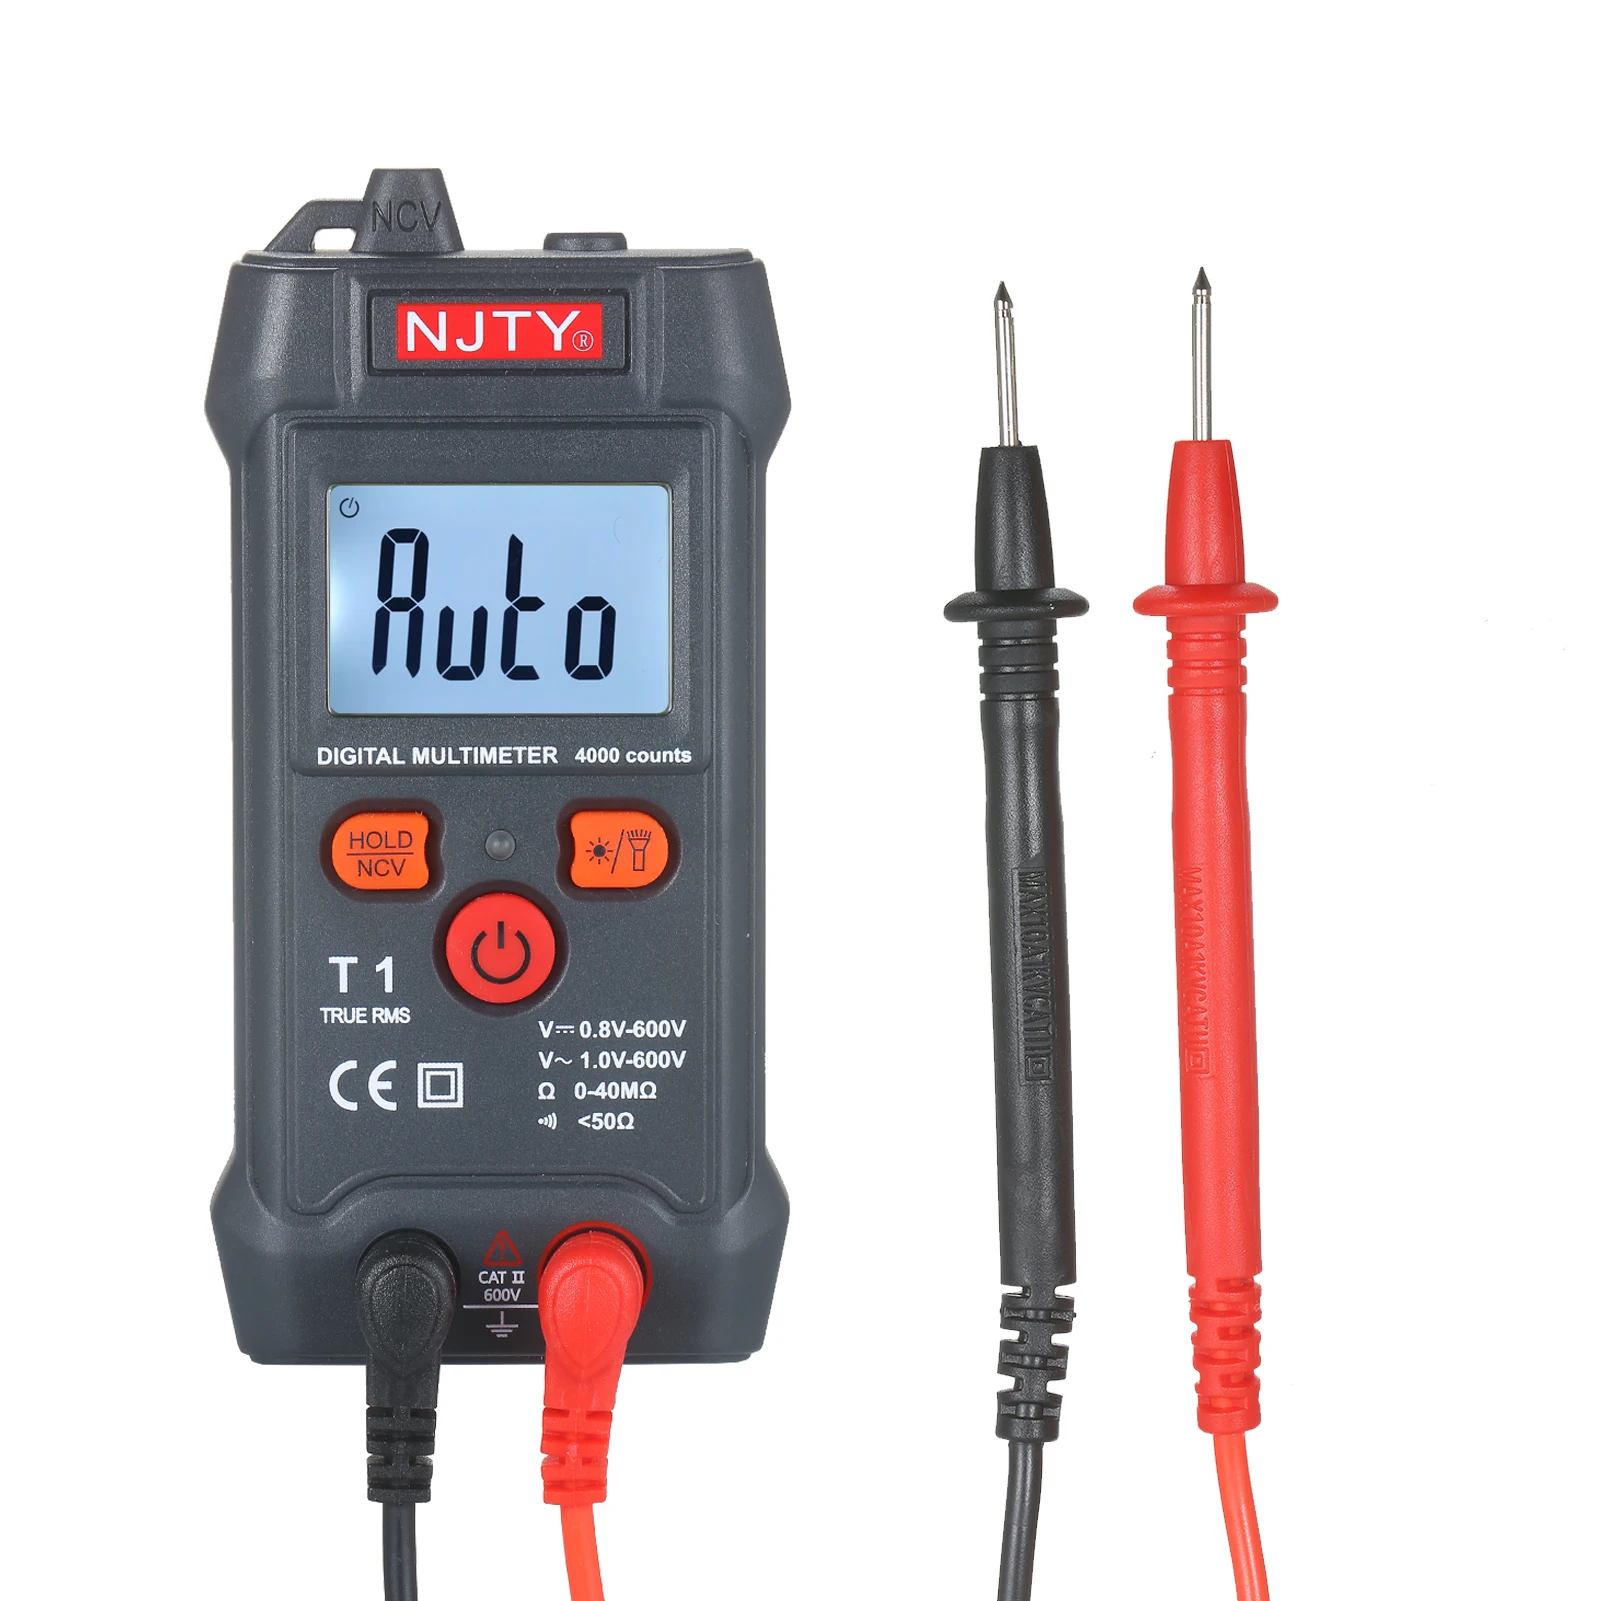 

NJTY Palm-size Multimeter Auto Range NCV 4000 Counts True RMS 600V Voltmeter Ohm Voltage Tester AC/DC Resistance ON-OFF Buzzer